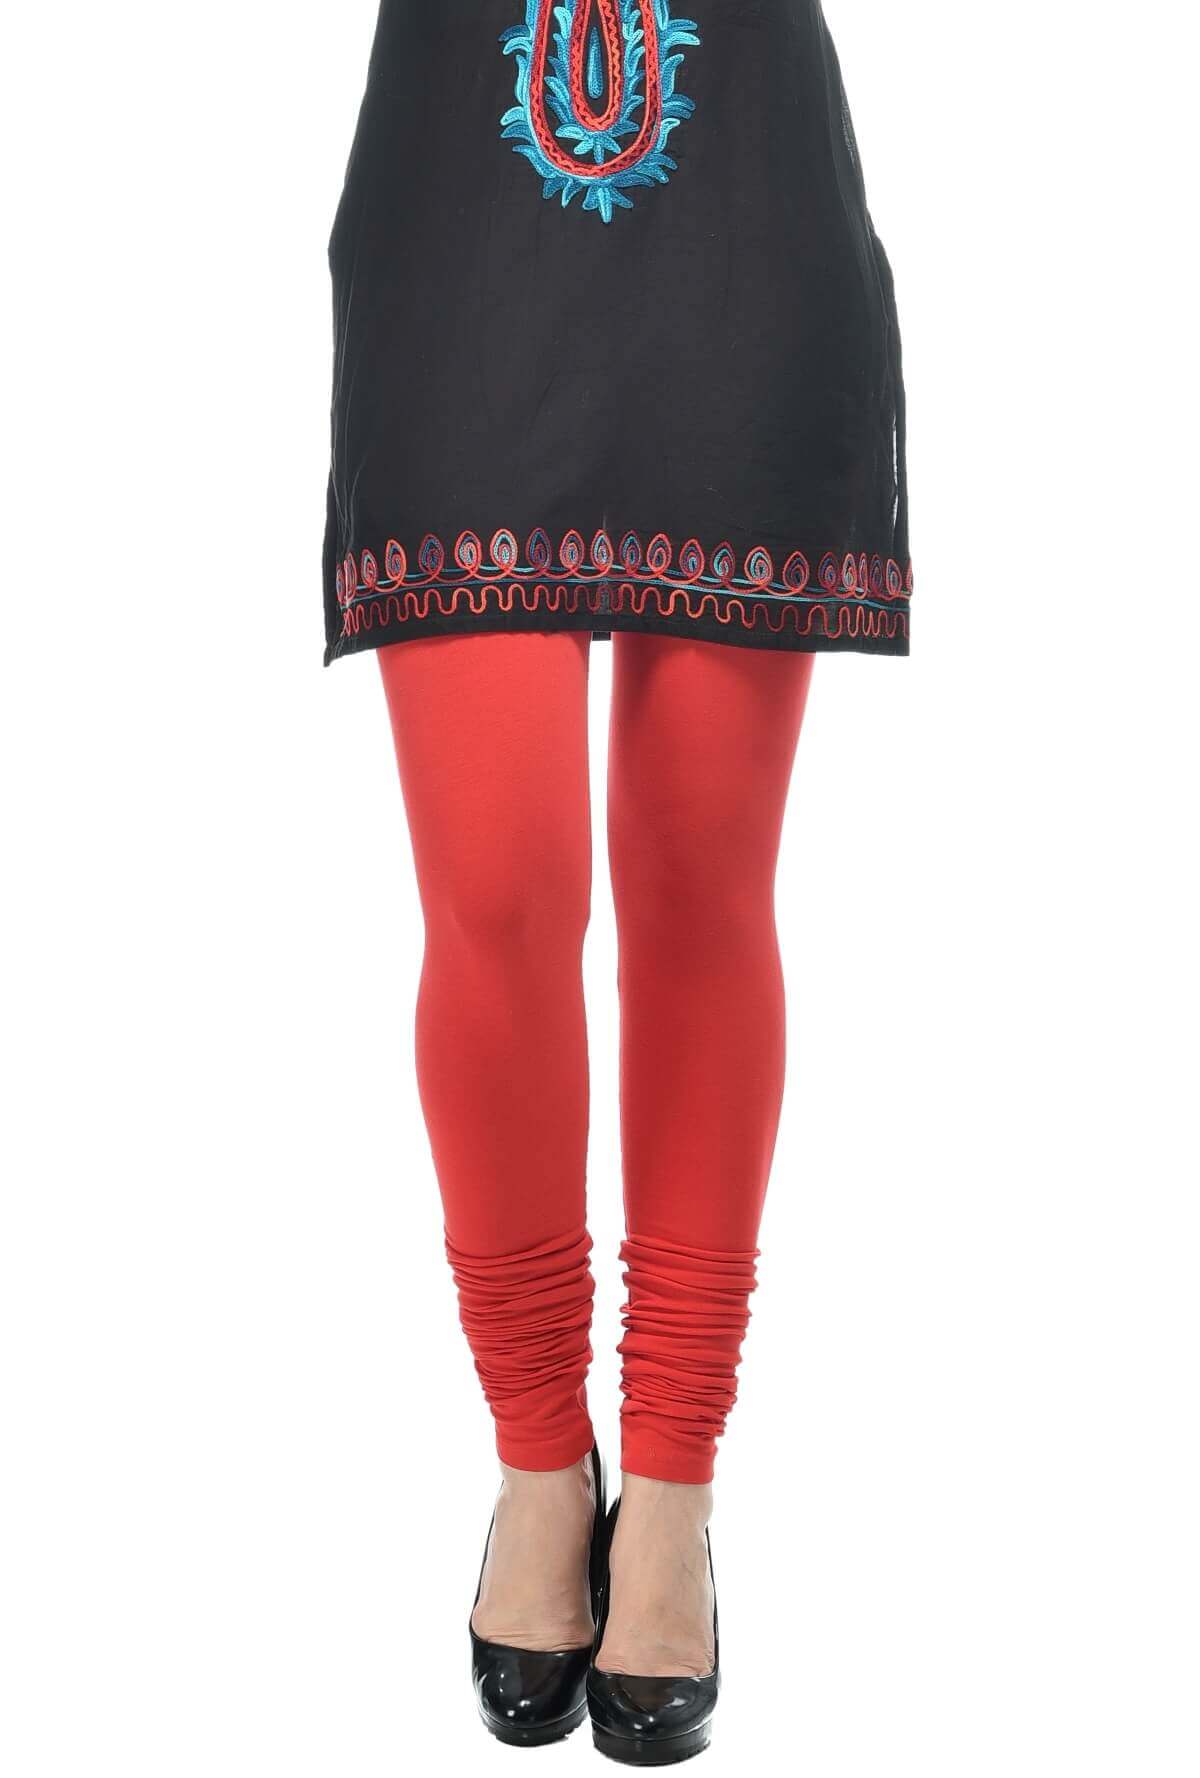 Women''''s Churidar Leggings (Red, White) (Free Size) at Rs 149